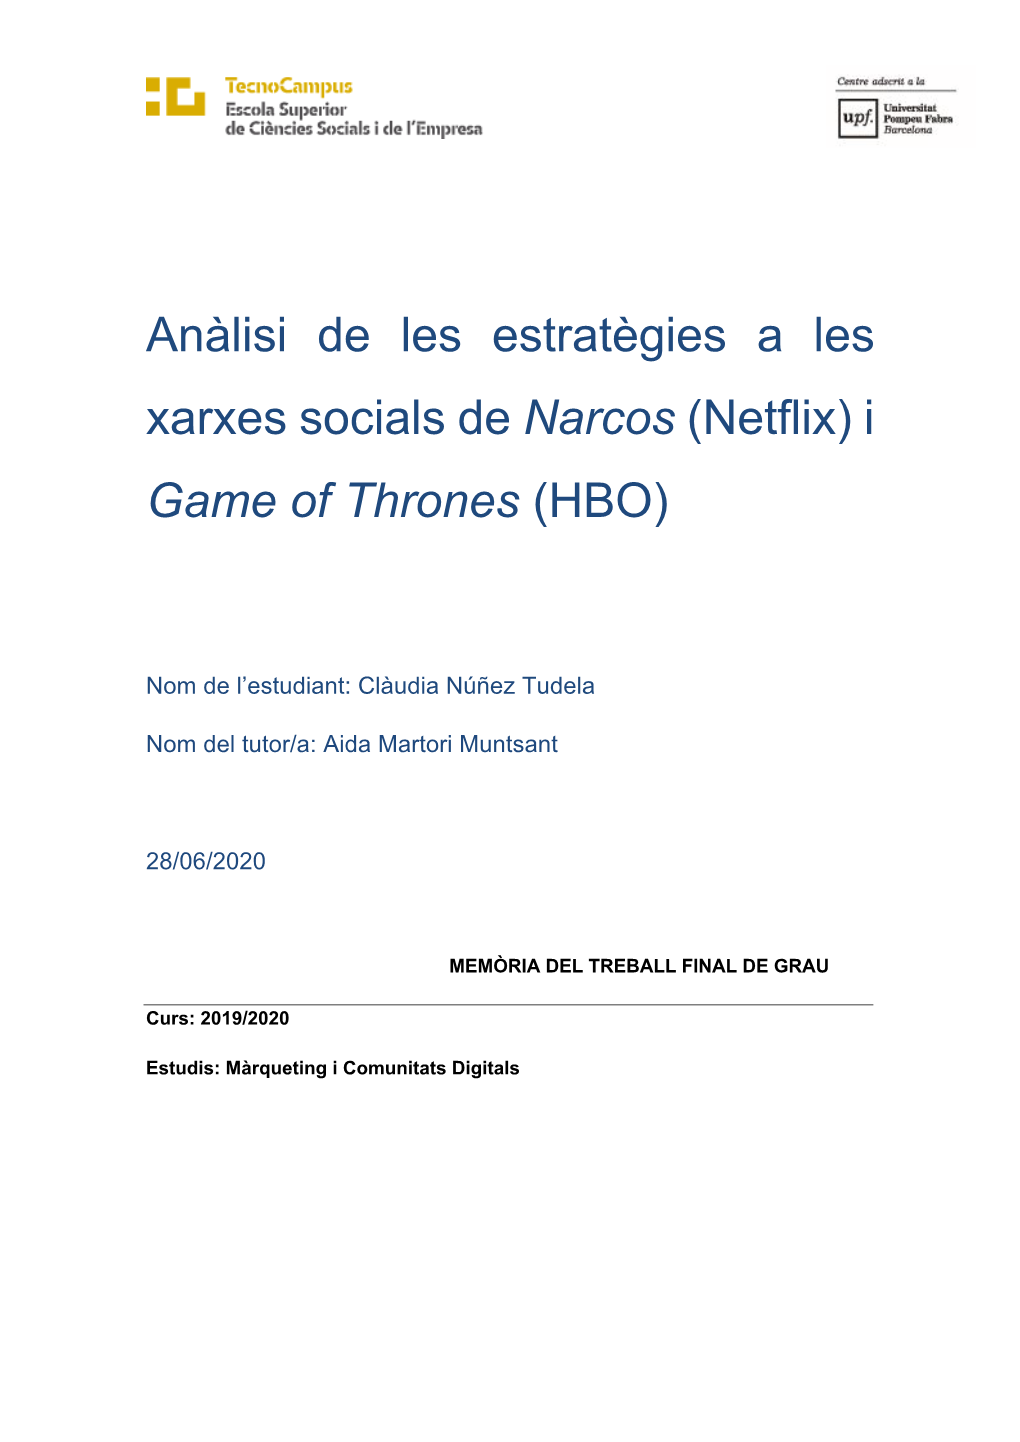 Netflix) I Game of Thrones (HBO)